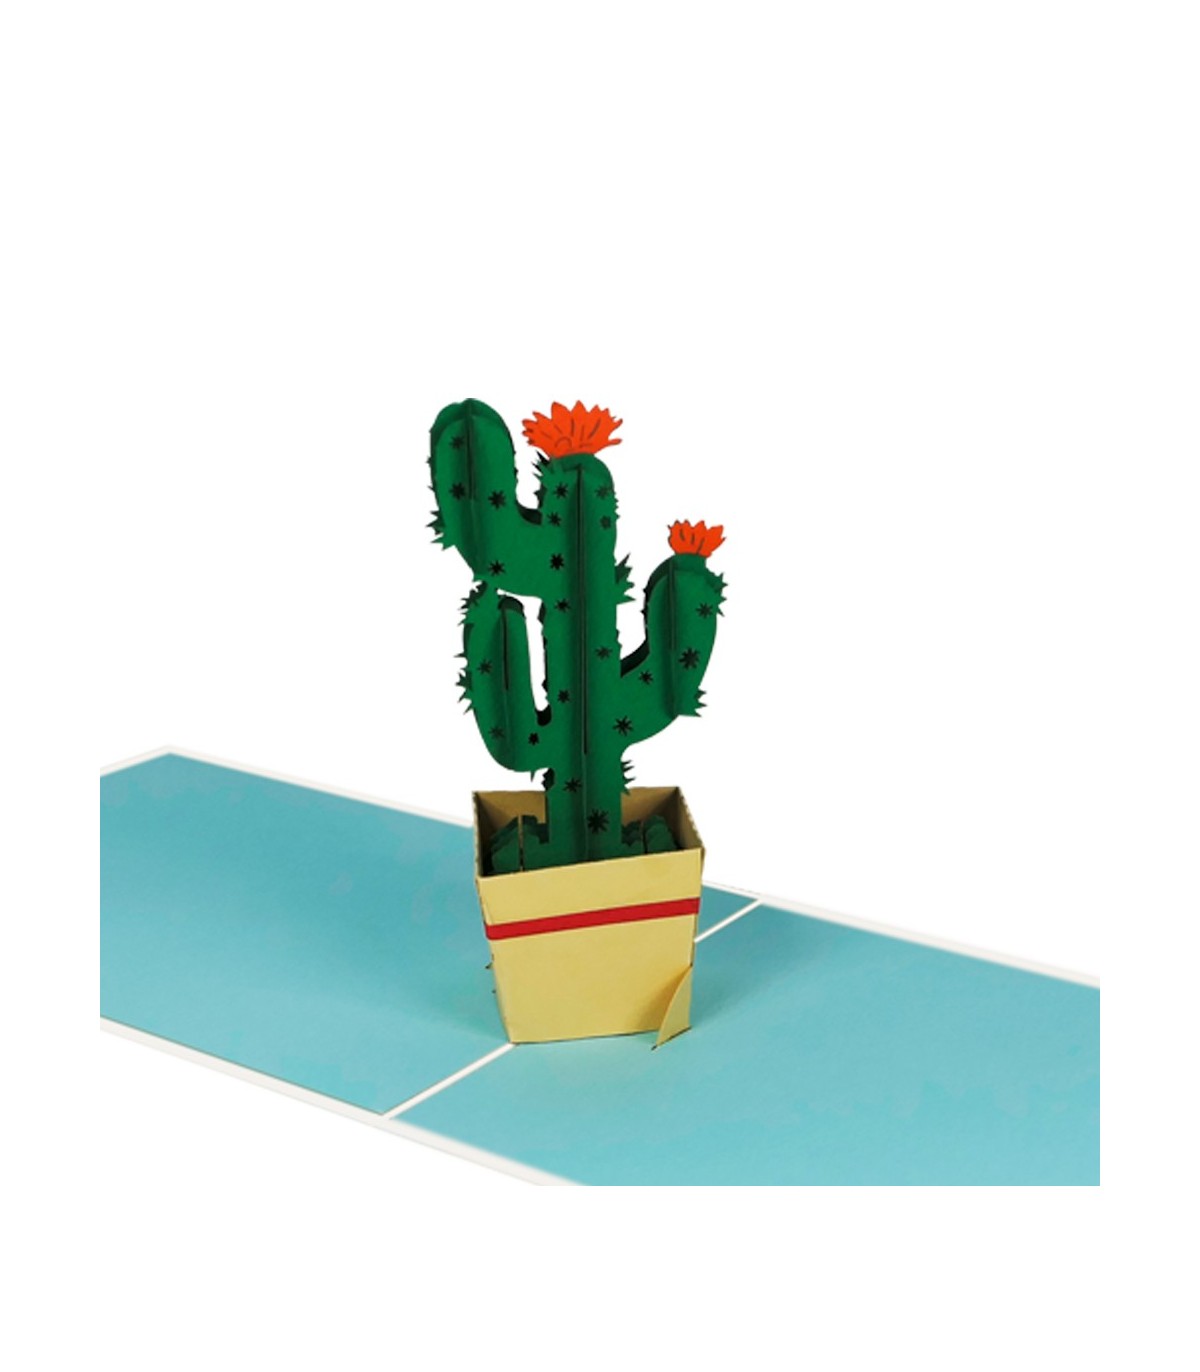 https://sweetpopup.com/244-superlarge_default/cactus-flower-pop-up-card.jpg